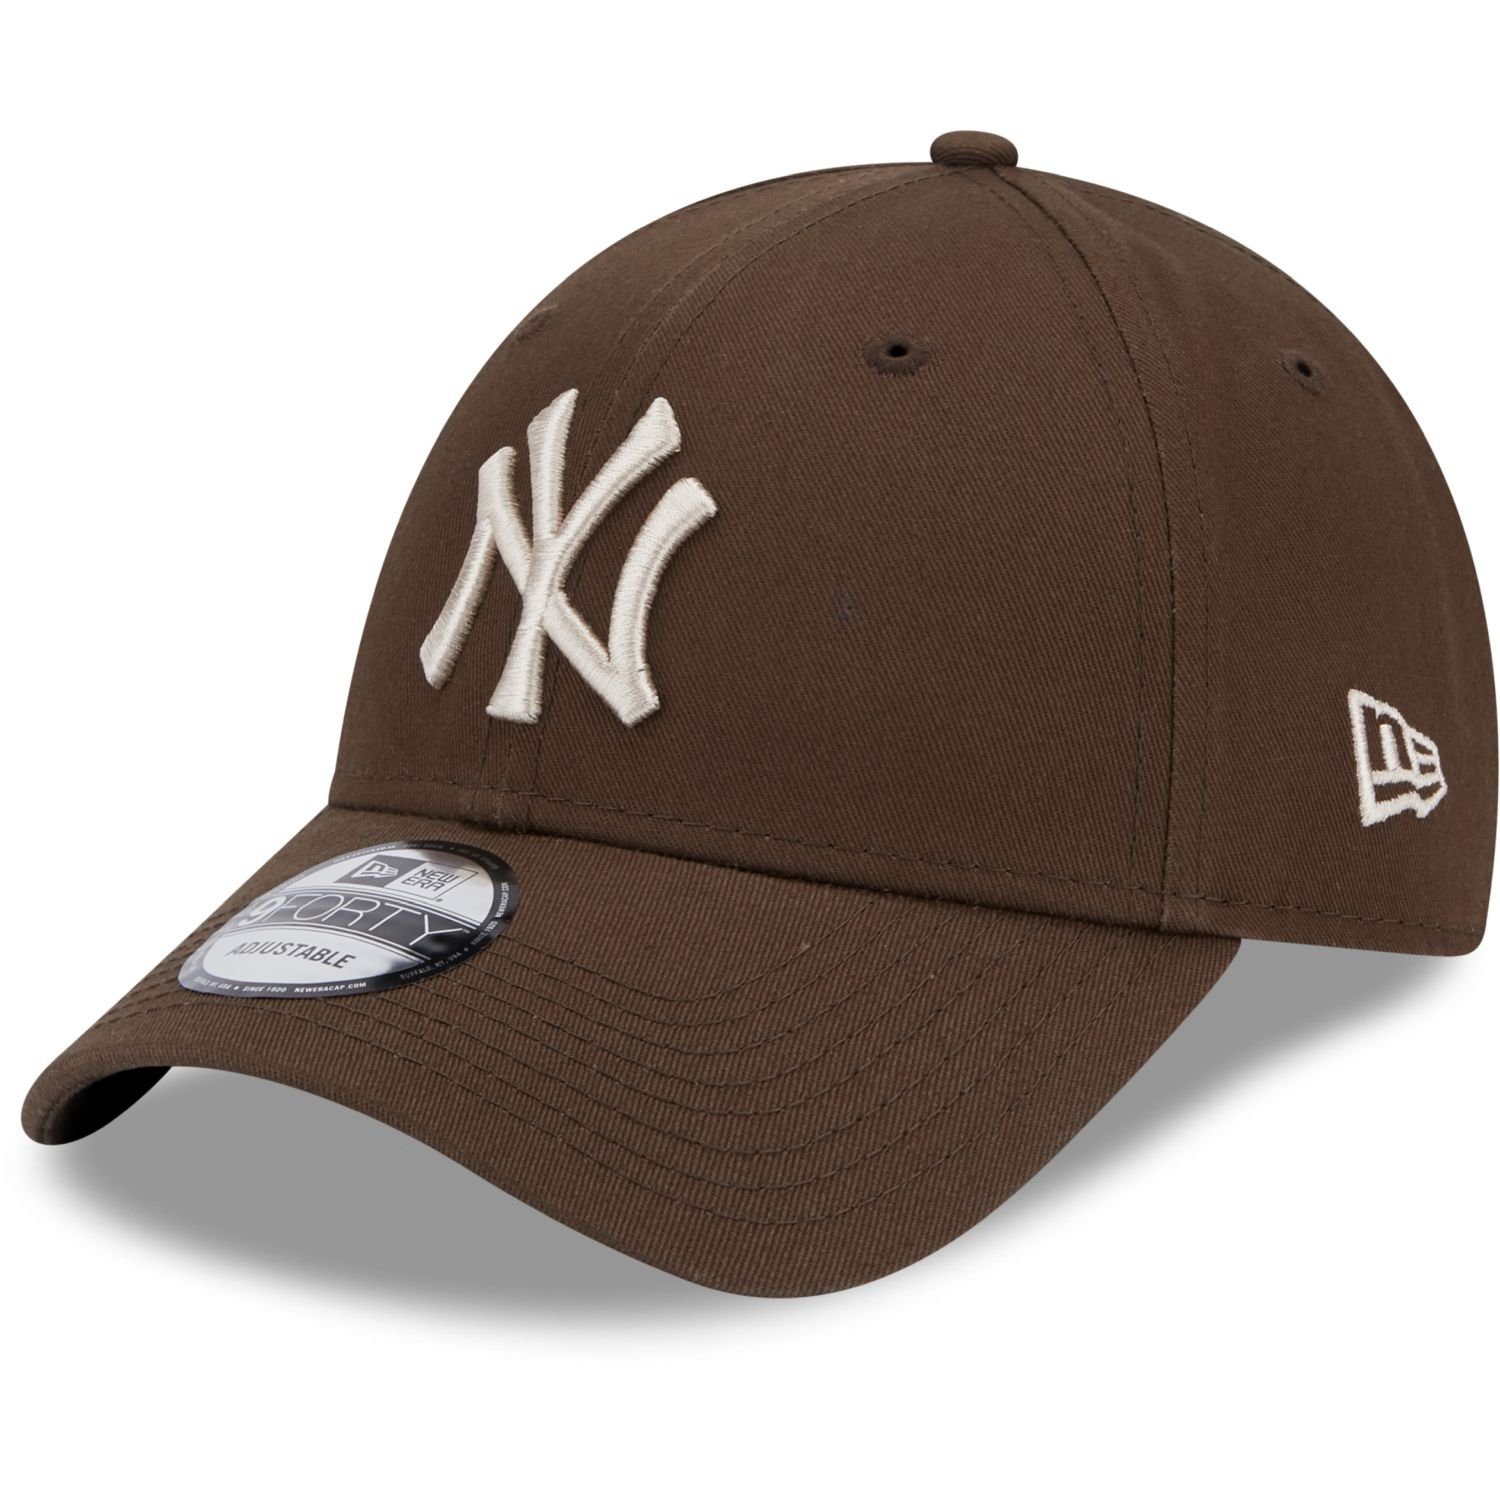 New Cap Era dunkelbraun 9Forty York New walnut Strapback Baseball Yankees